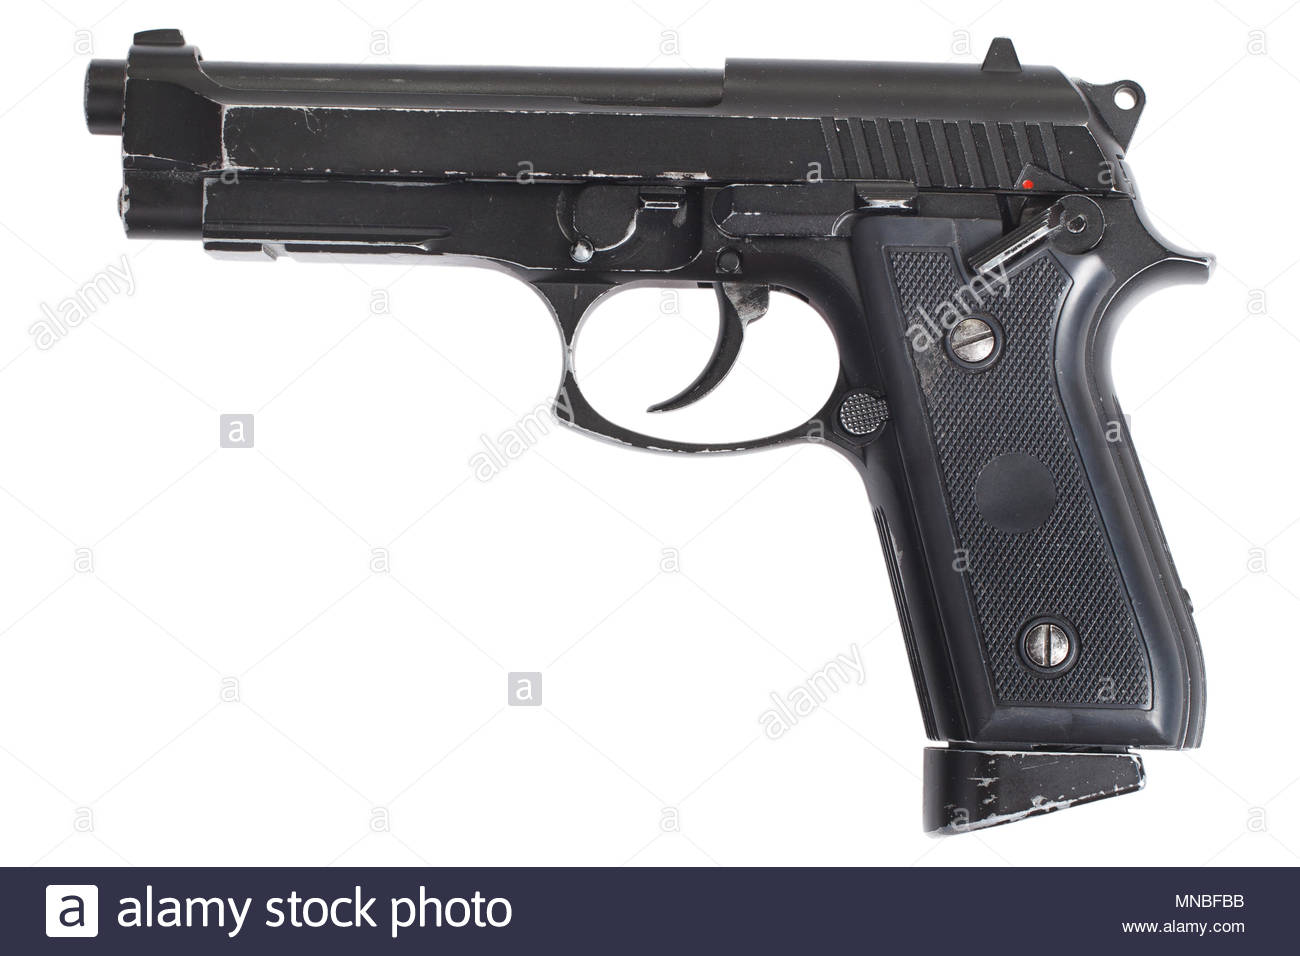 Beretta M9 Gun Isolated On White Background Stock Photo